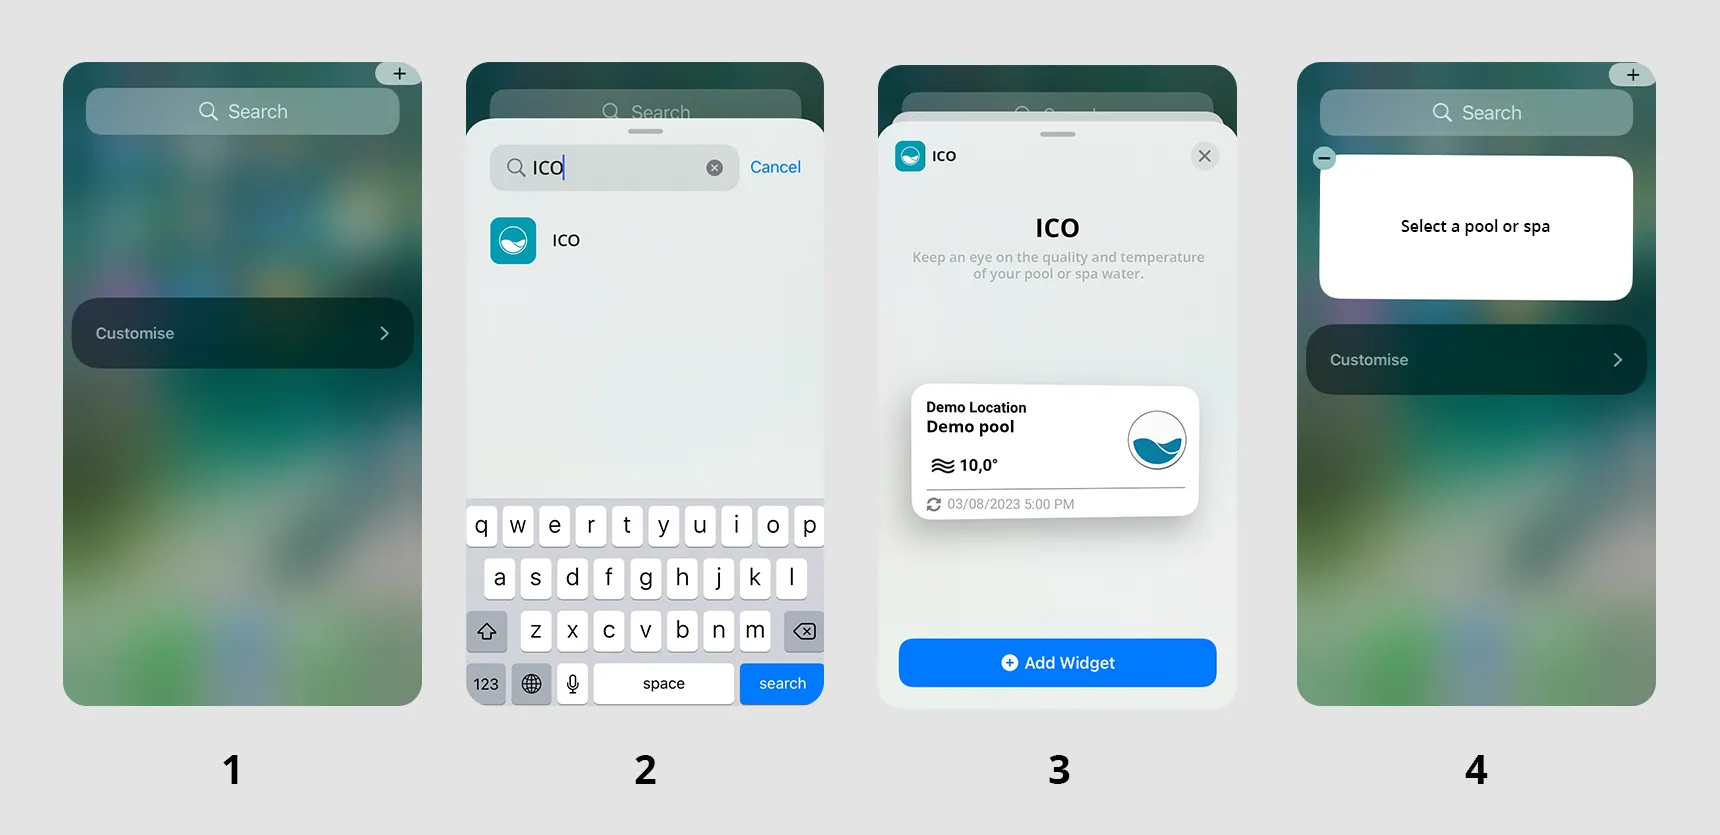 Installing the ICO widget on an iOS smartphone